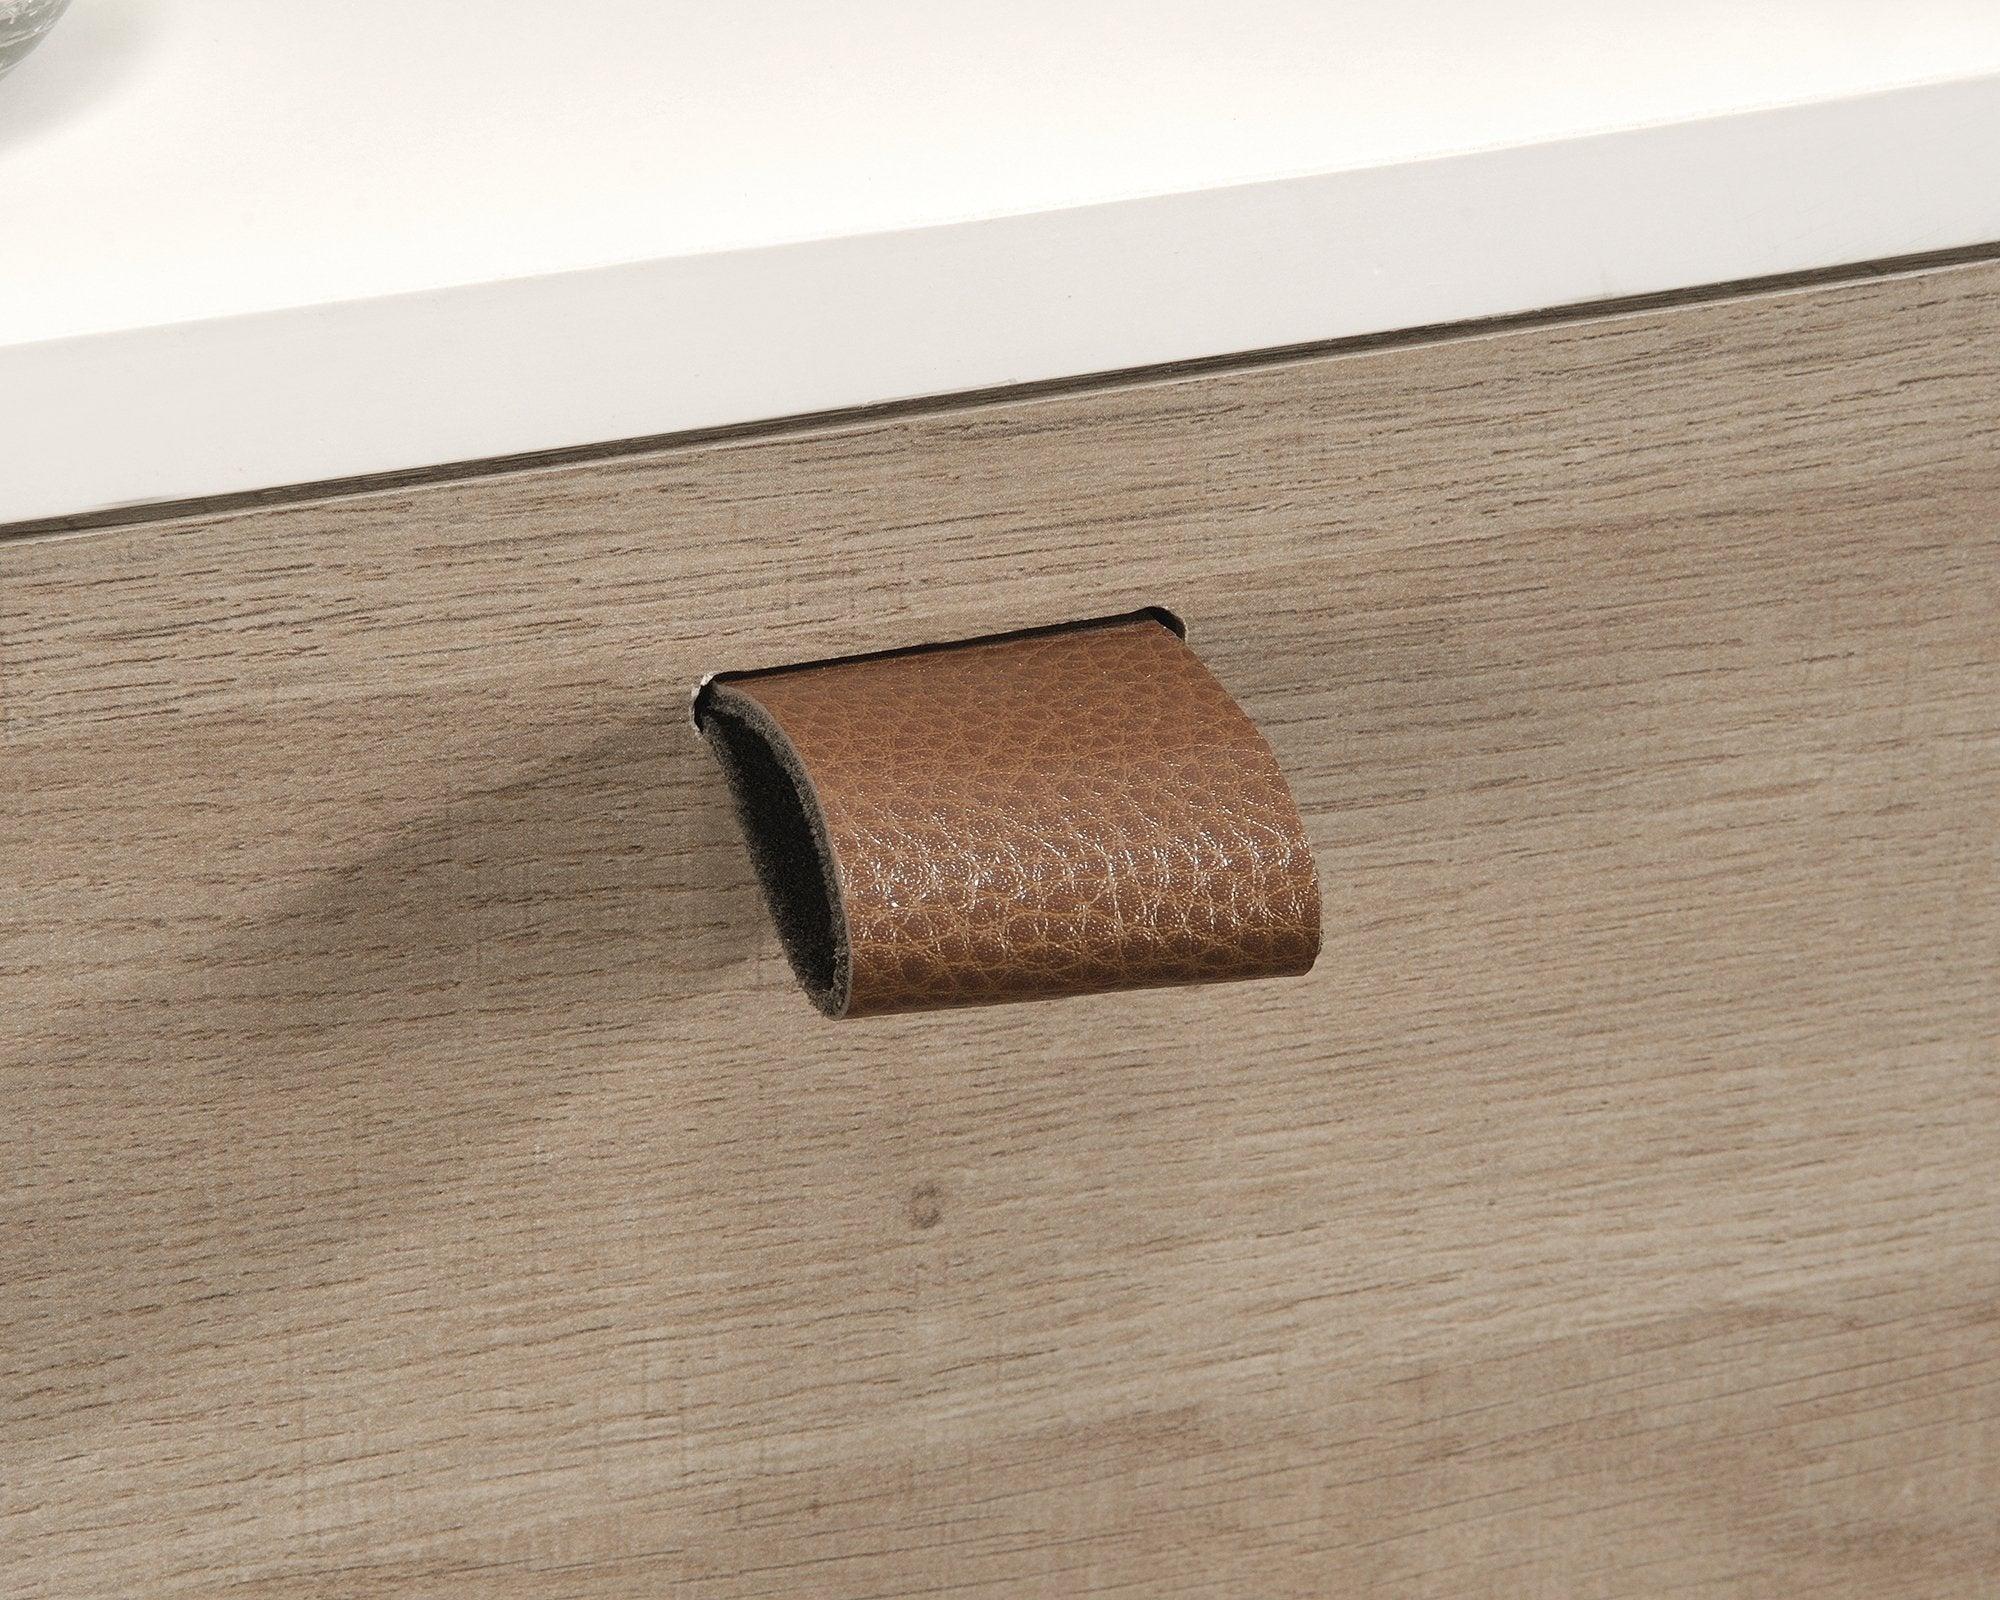 Avon leather handled foldaway wall desk - white - image 8